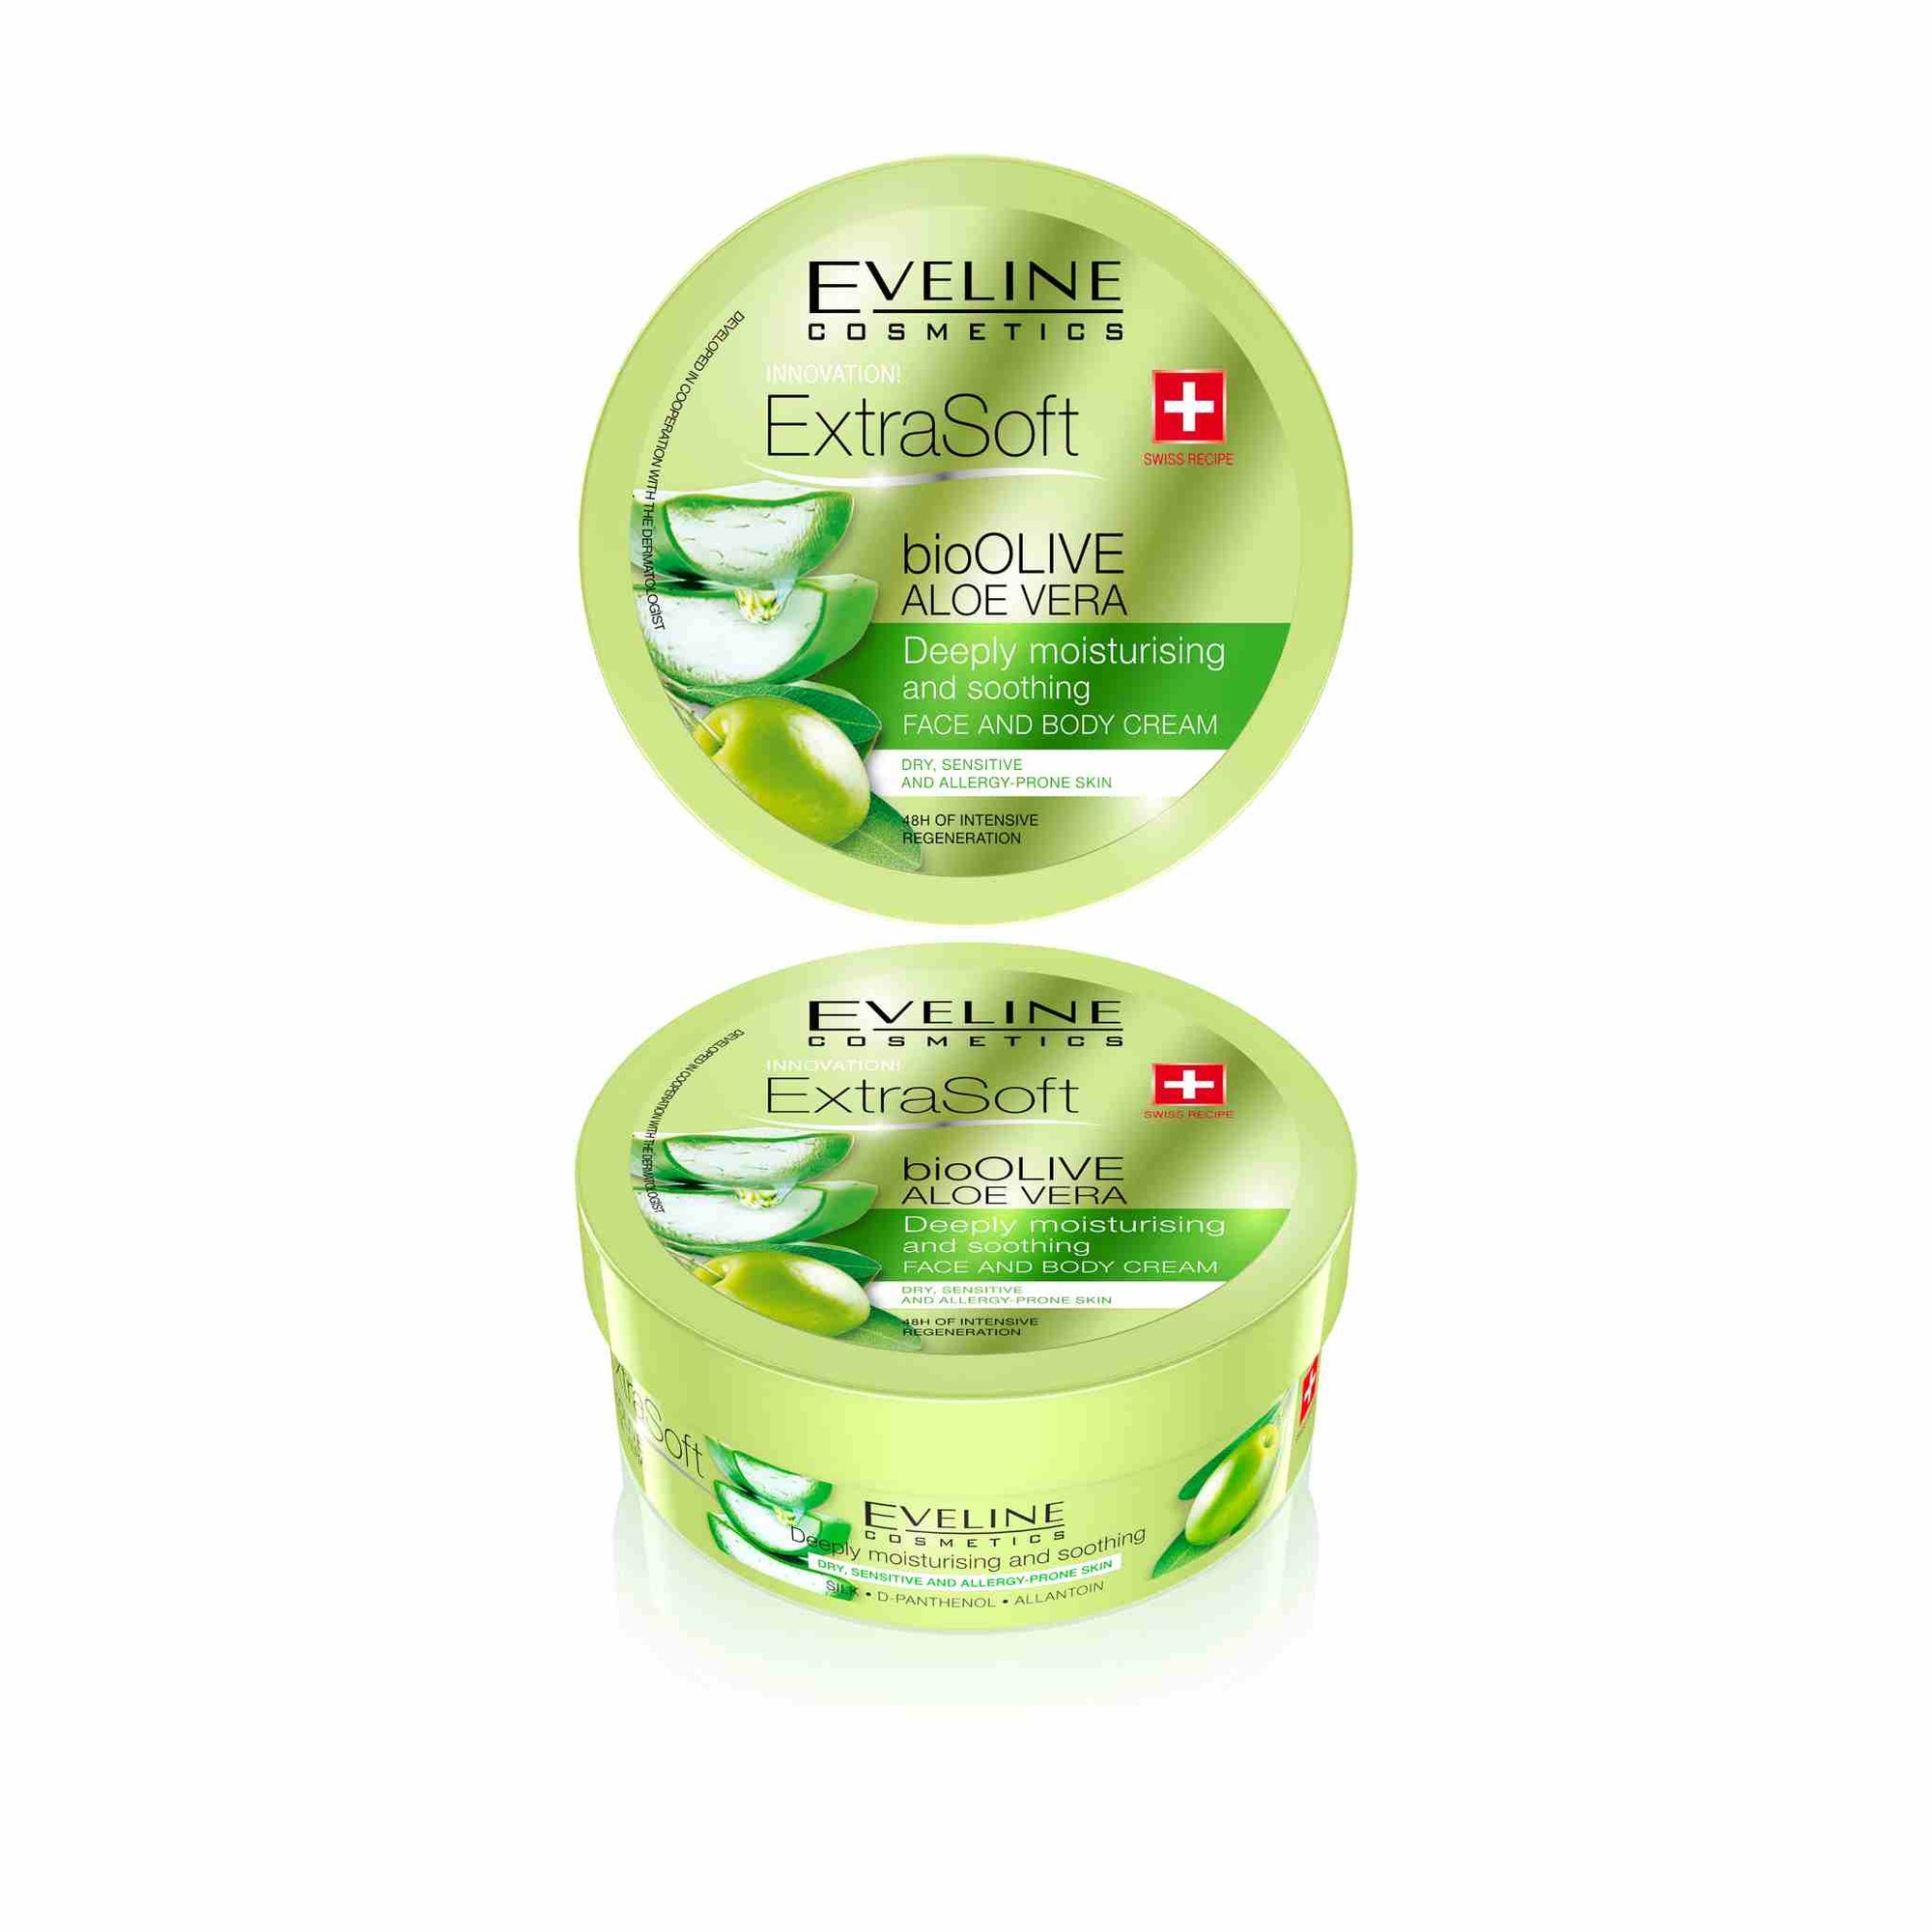 Extra Soft bio Olive Aloe Vera Deeply Moisturizing and Smoothing Face and Body Cream